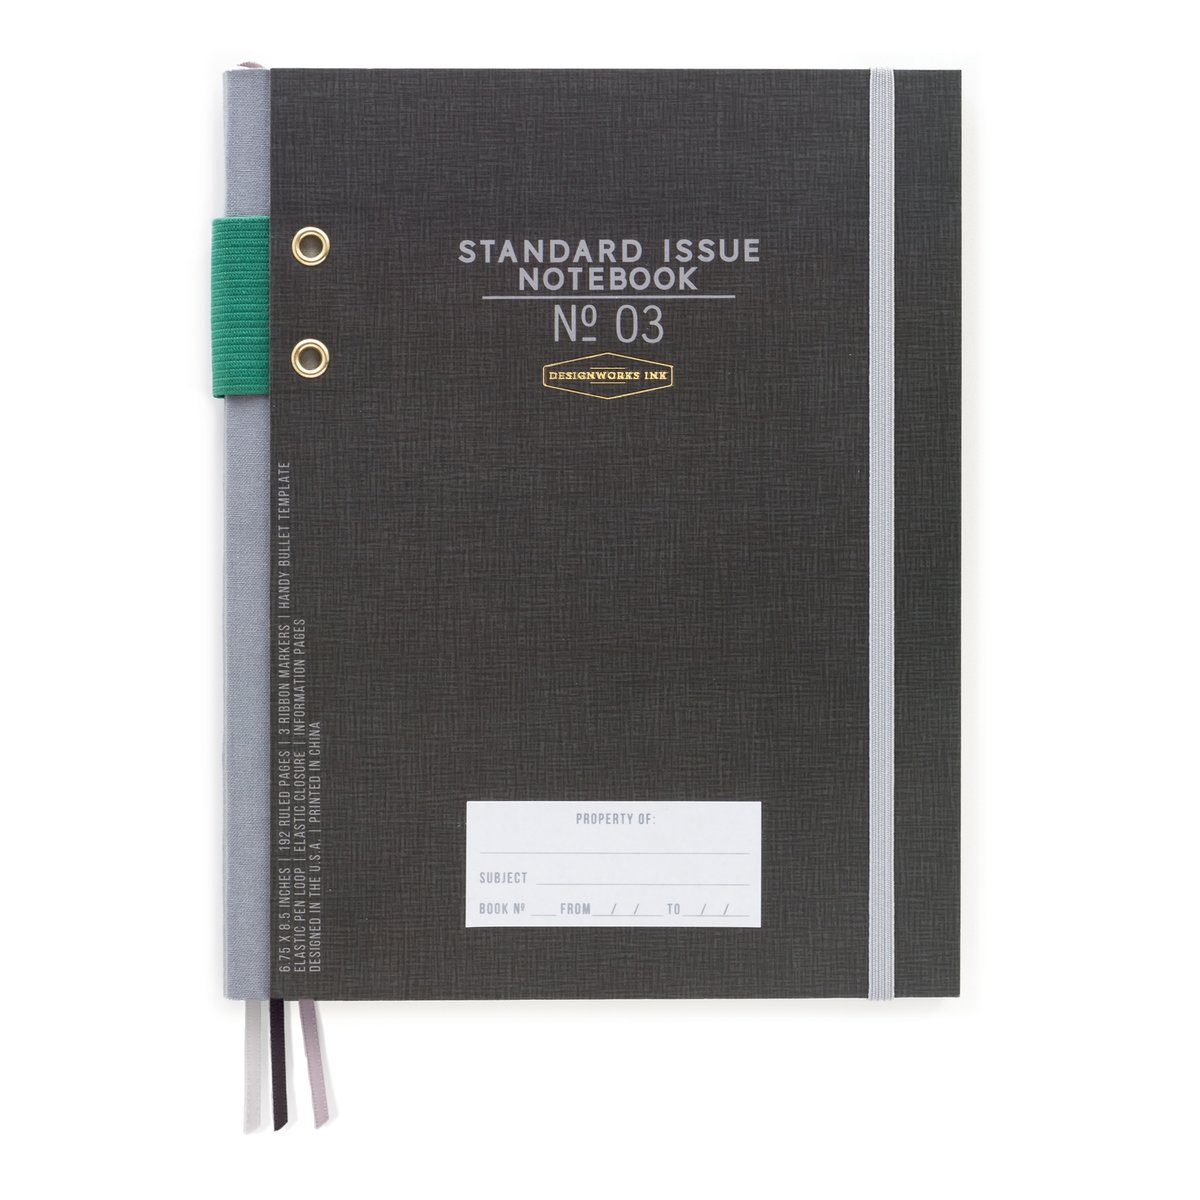 Zdjęcia - Planner Notatnik 192 Strony 'Standard Issue Jbe86 - Black' | Designworks Ink